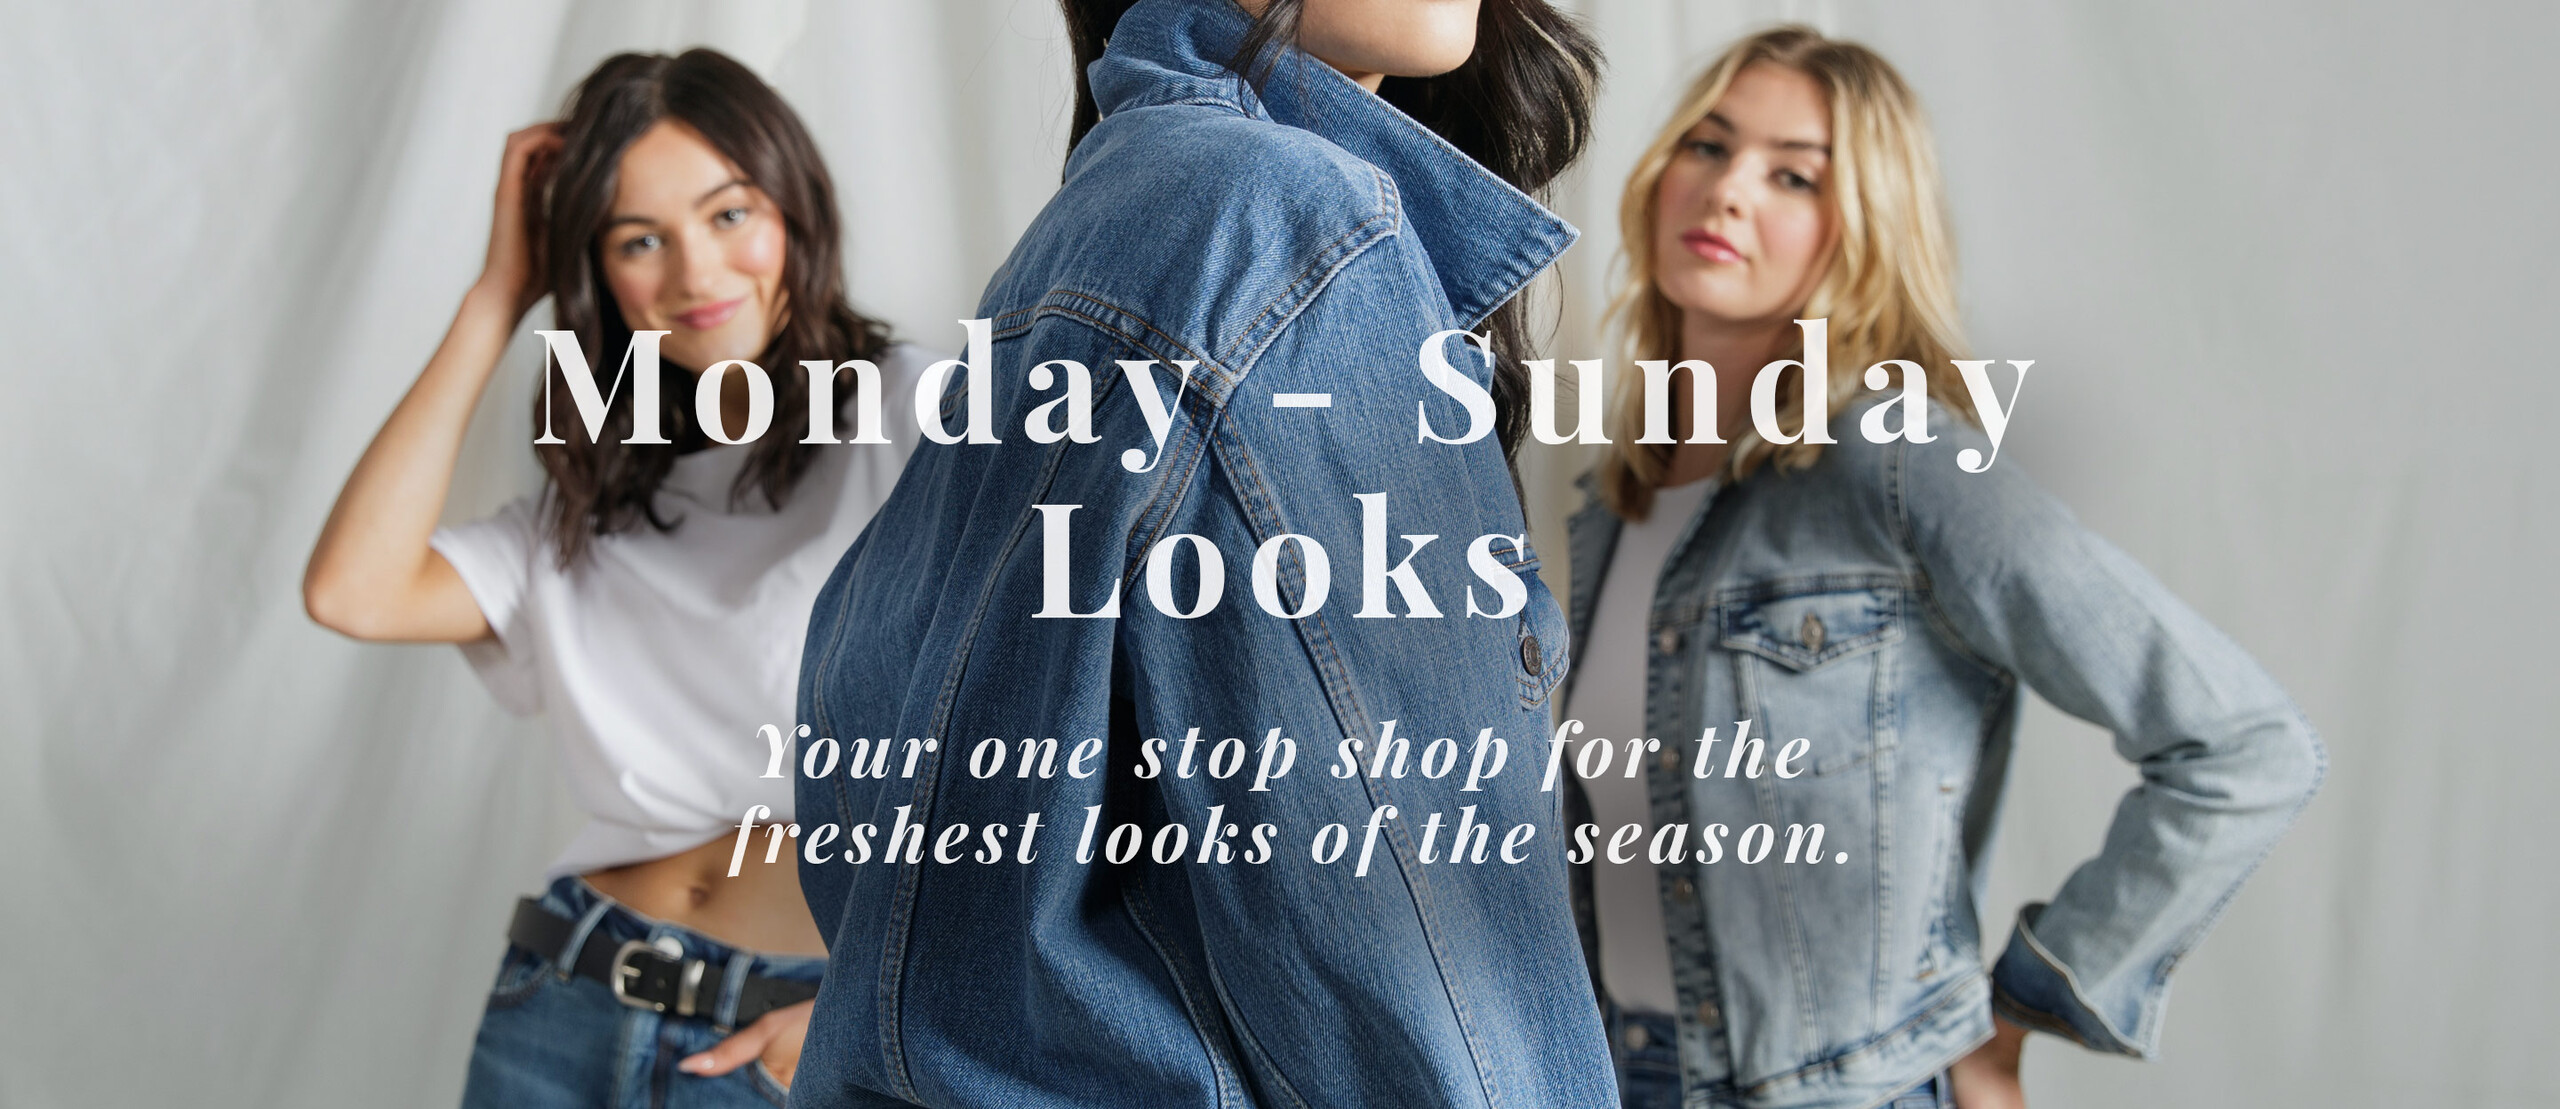 Shop Men's & Women's jeans, tops, and accessories